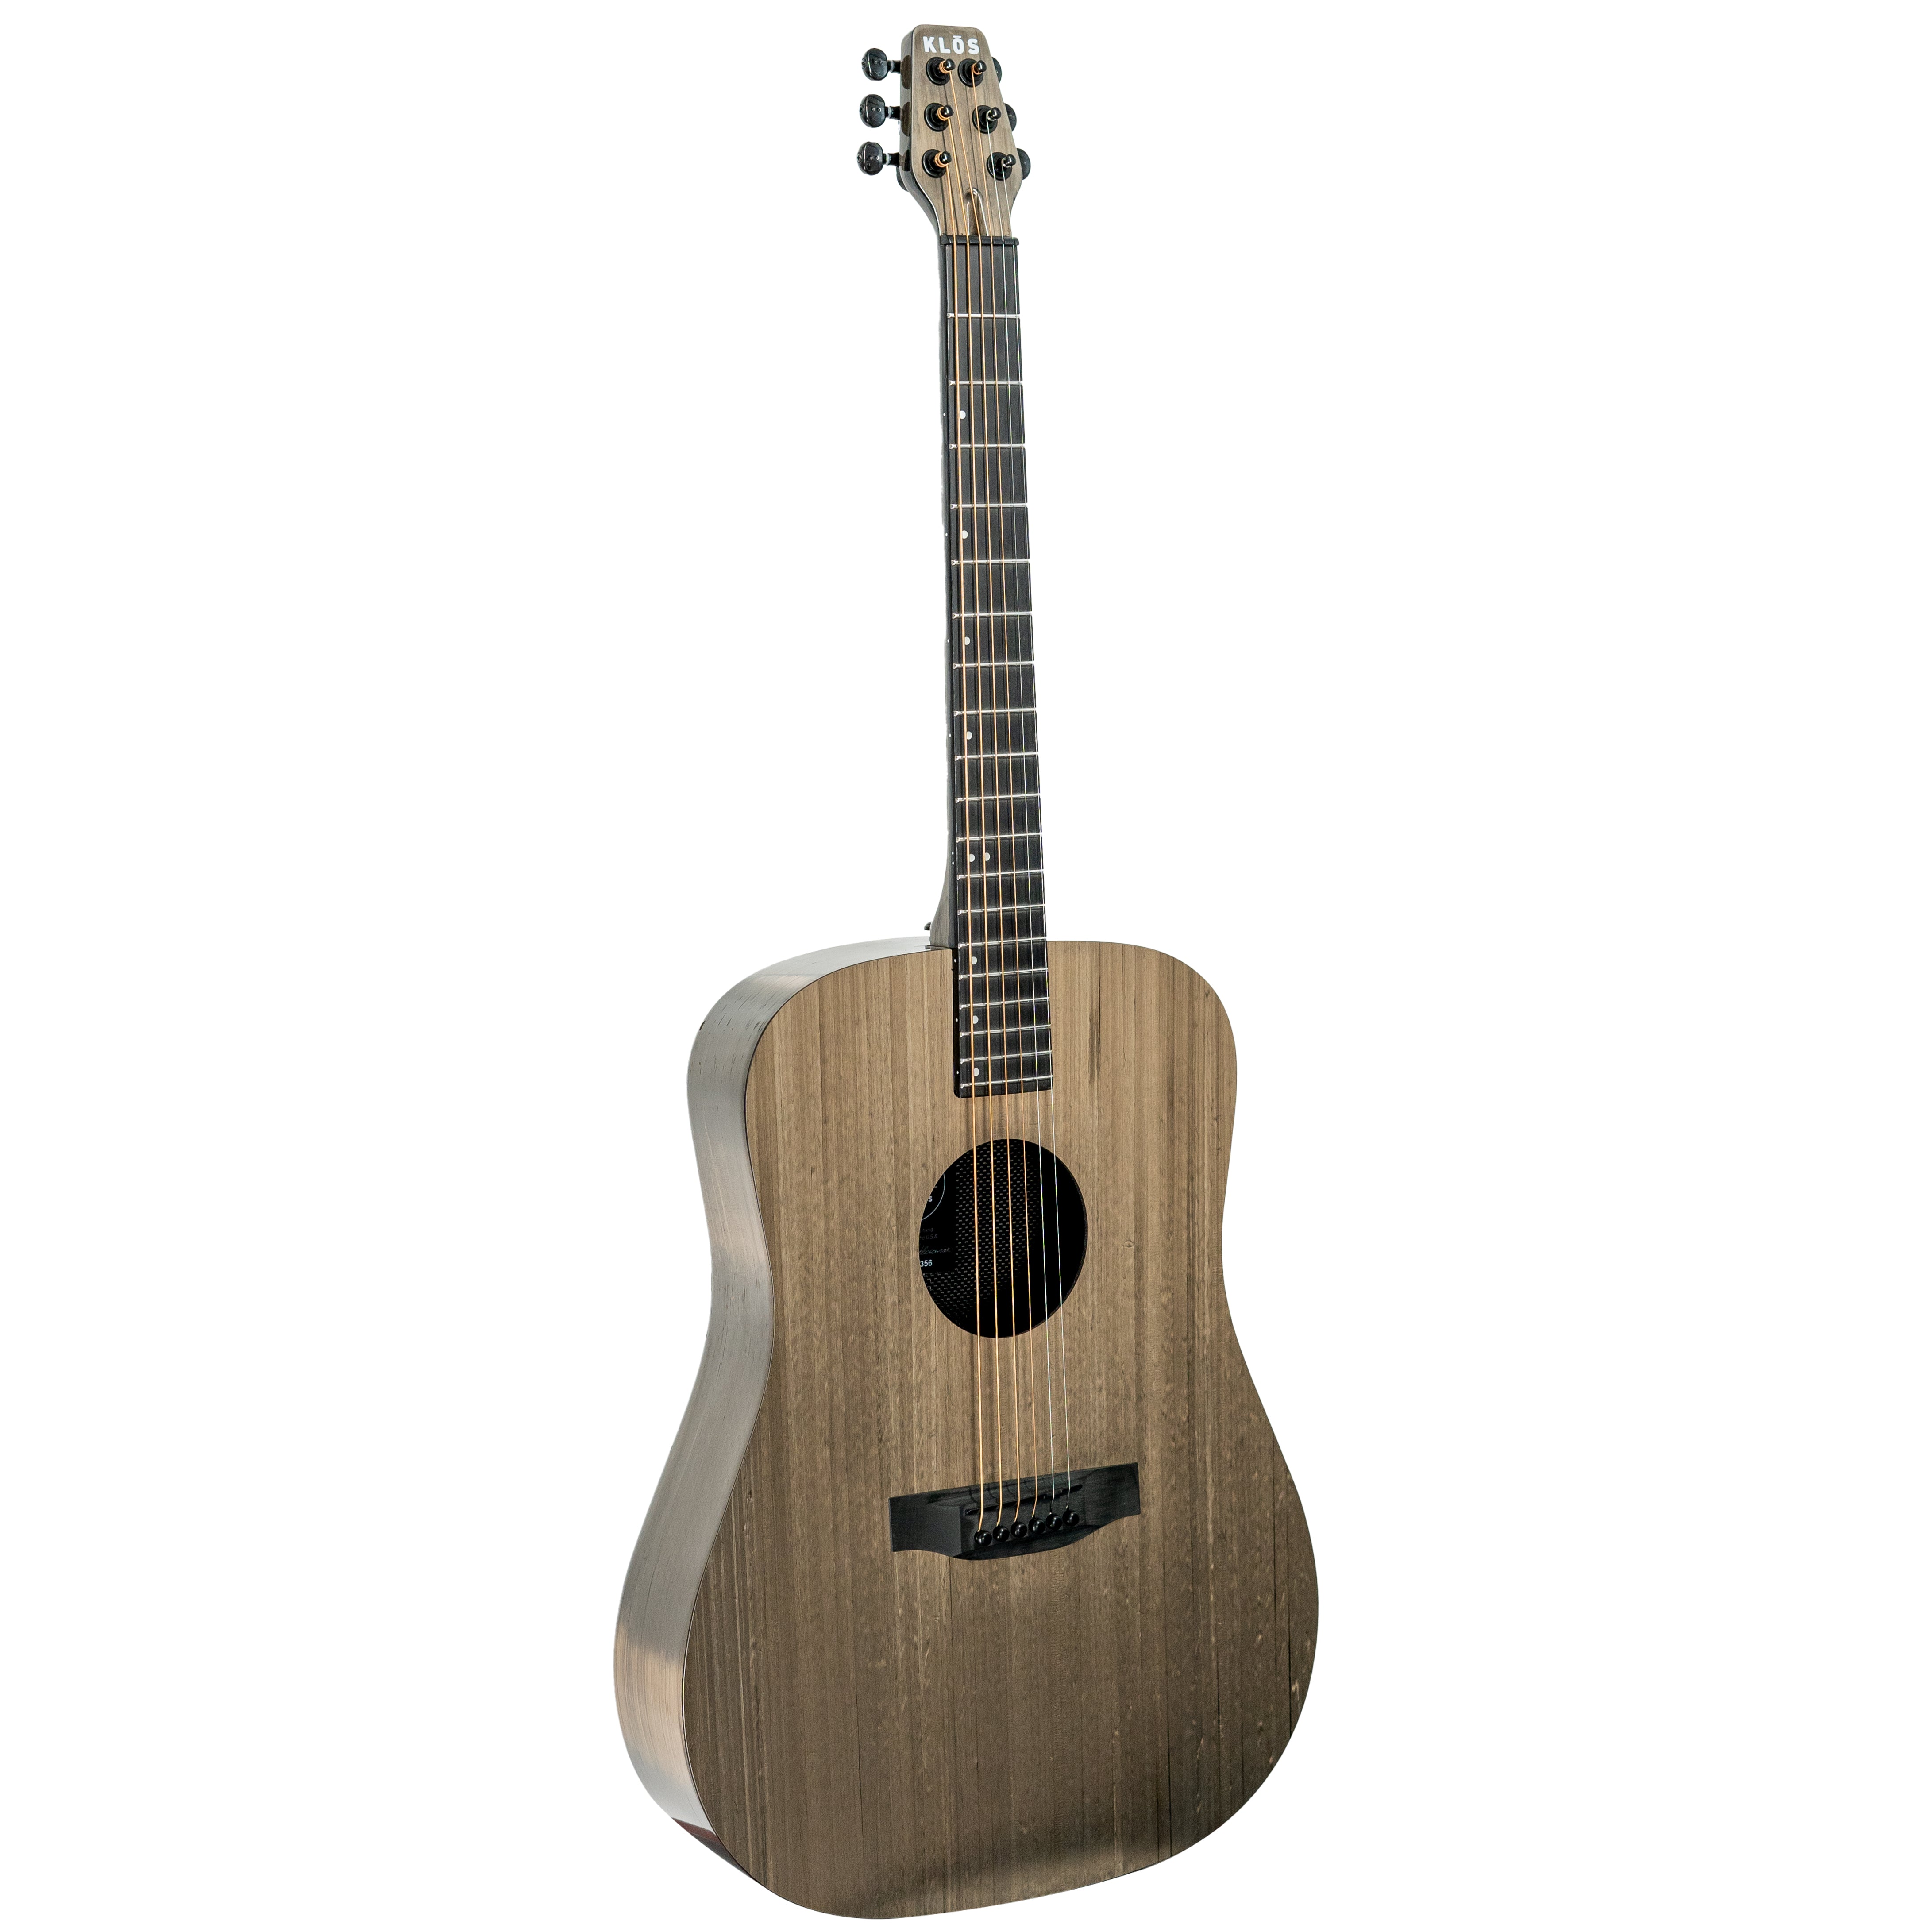 Carbon Timber Full Size Guitar